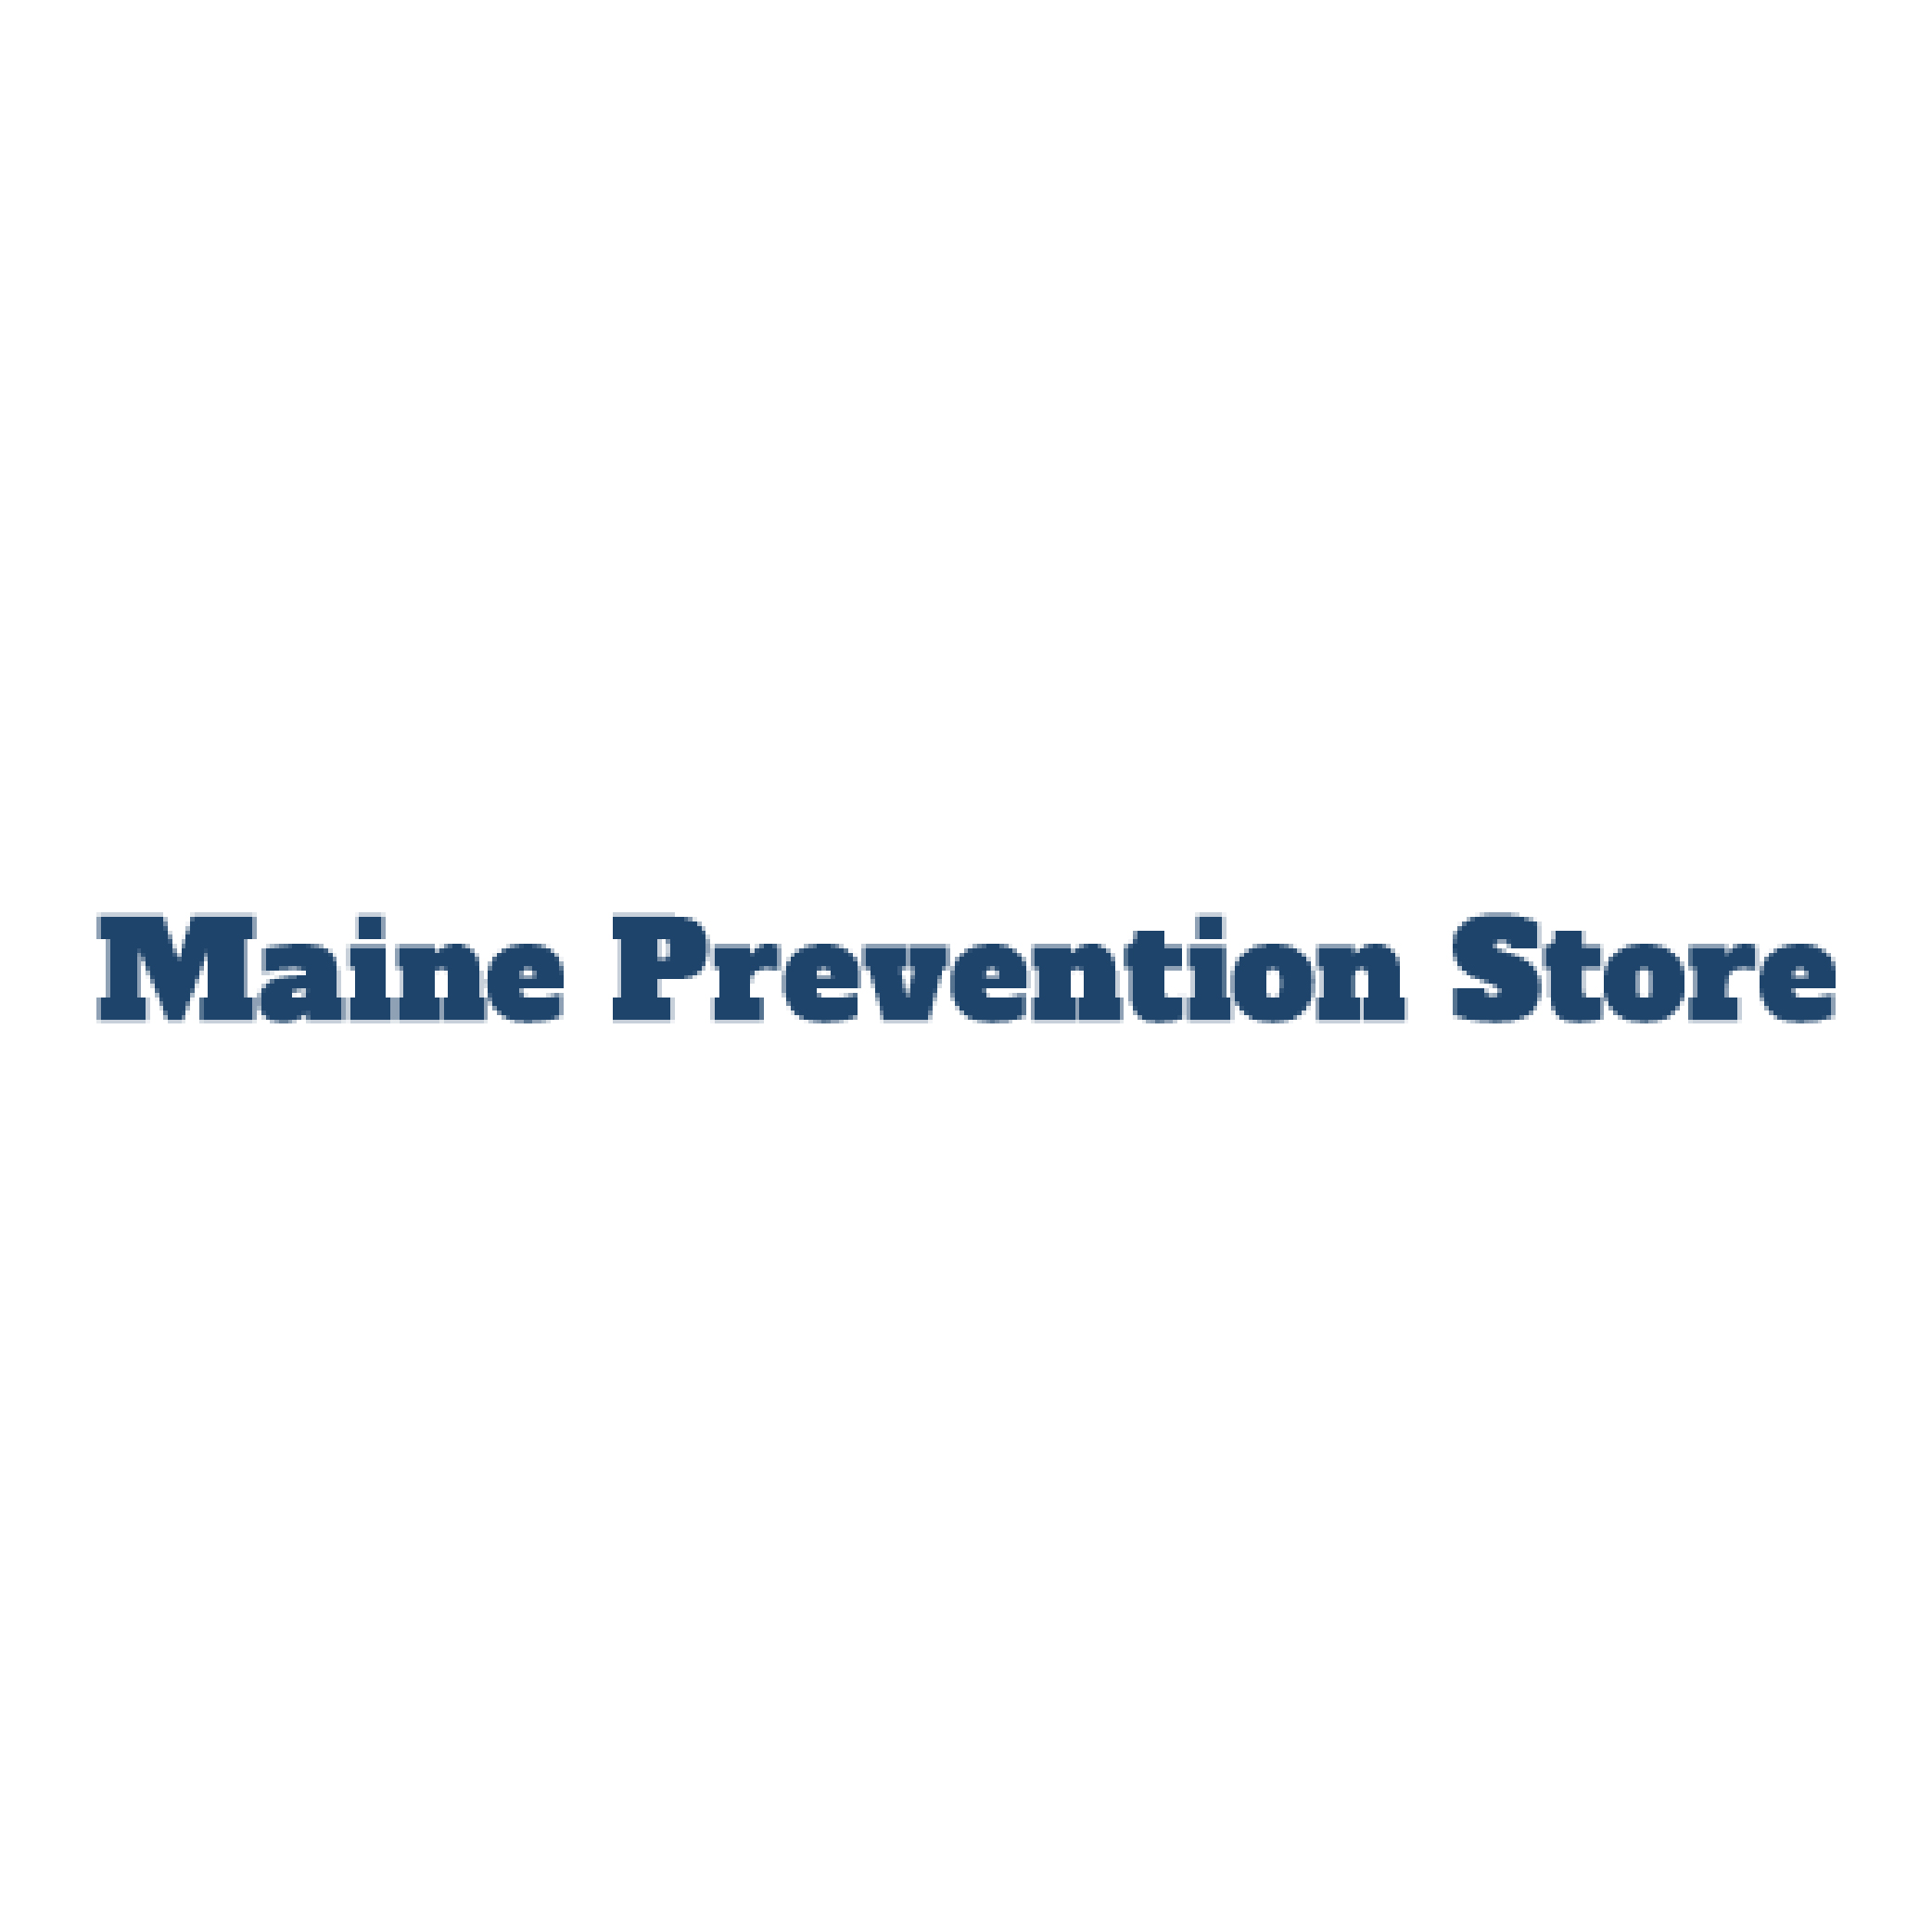 Maine Prevention Store logo